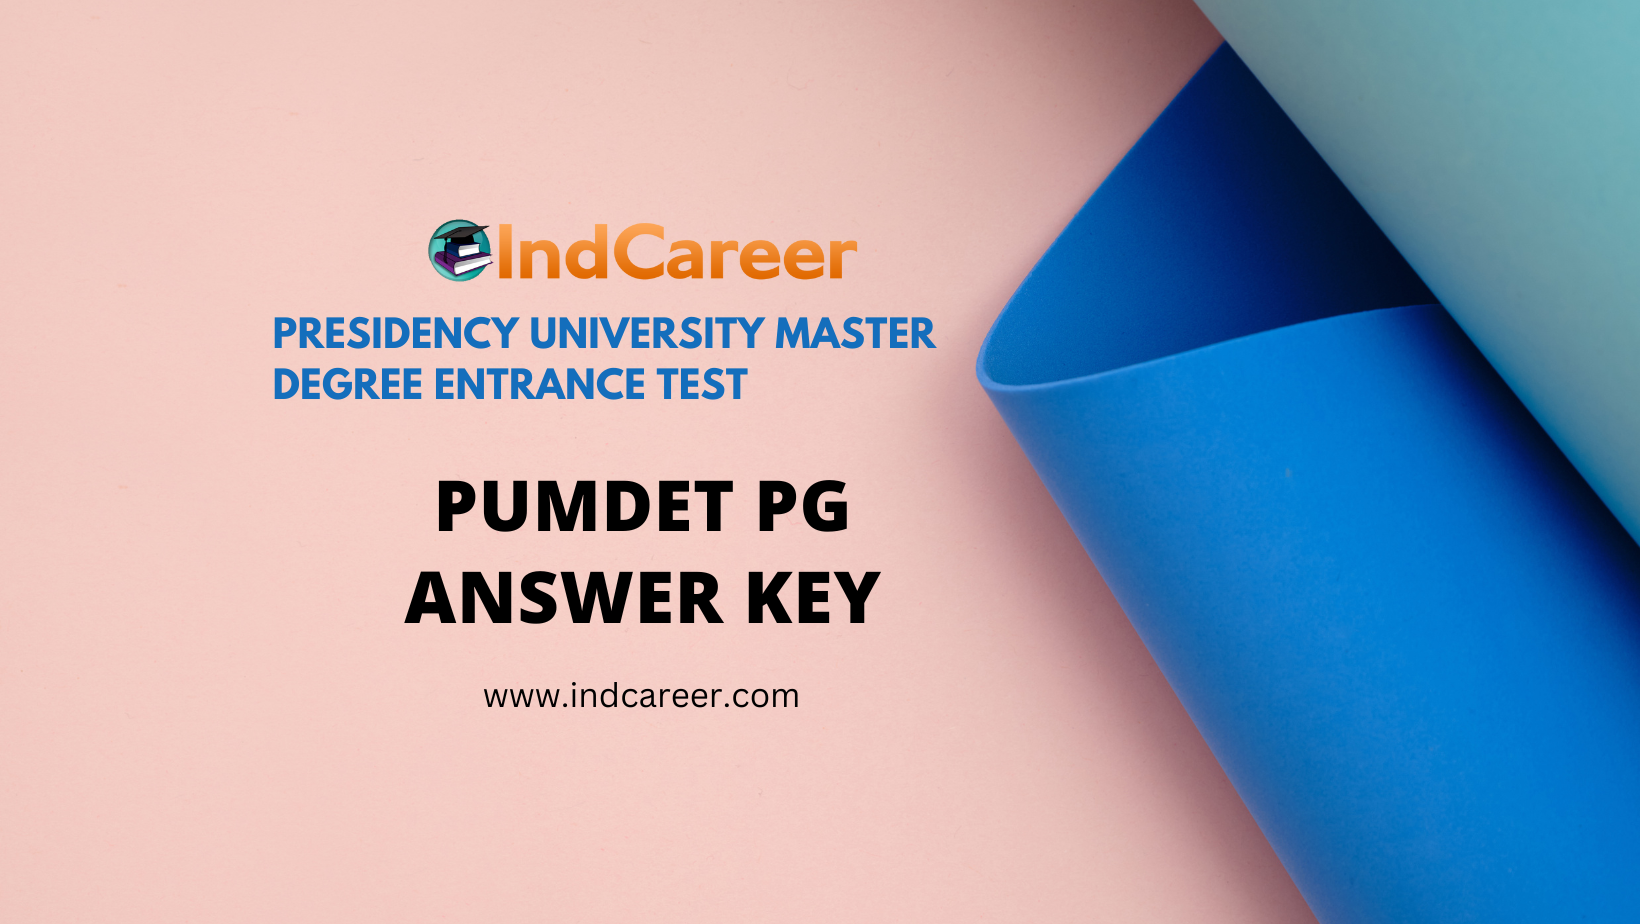 PUMDET PG Answer Key